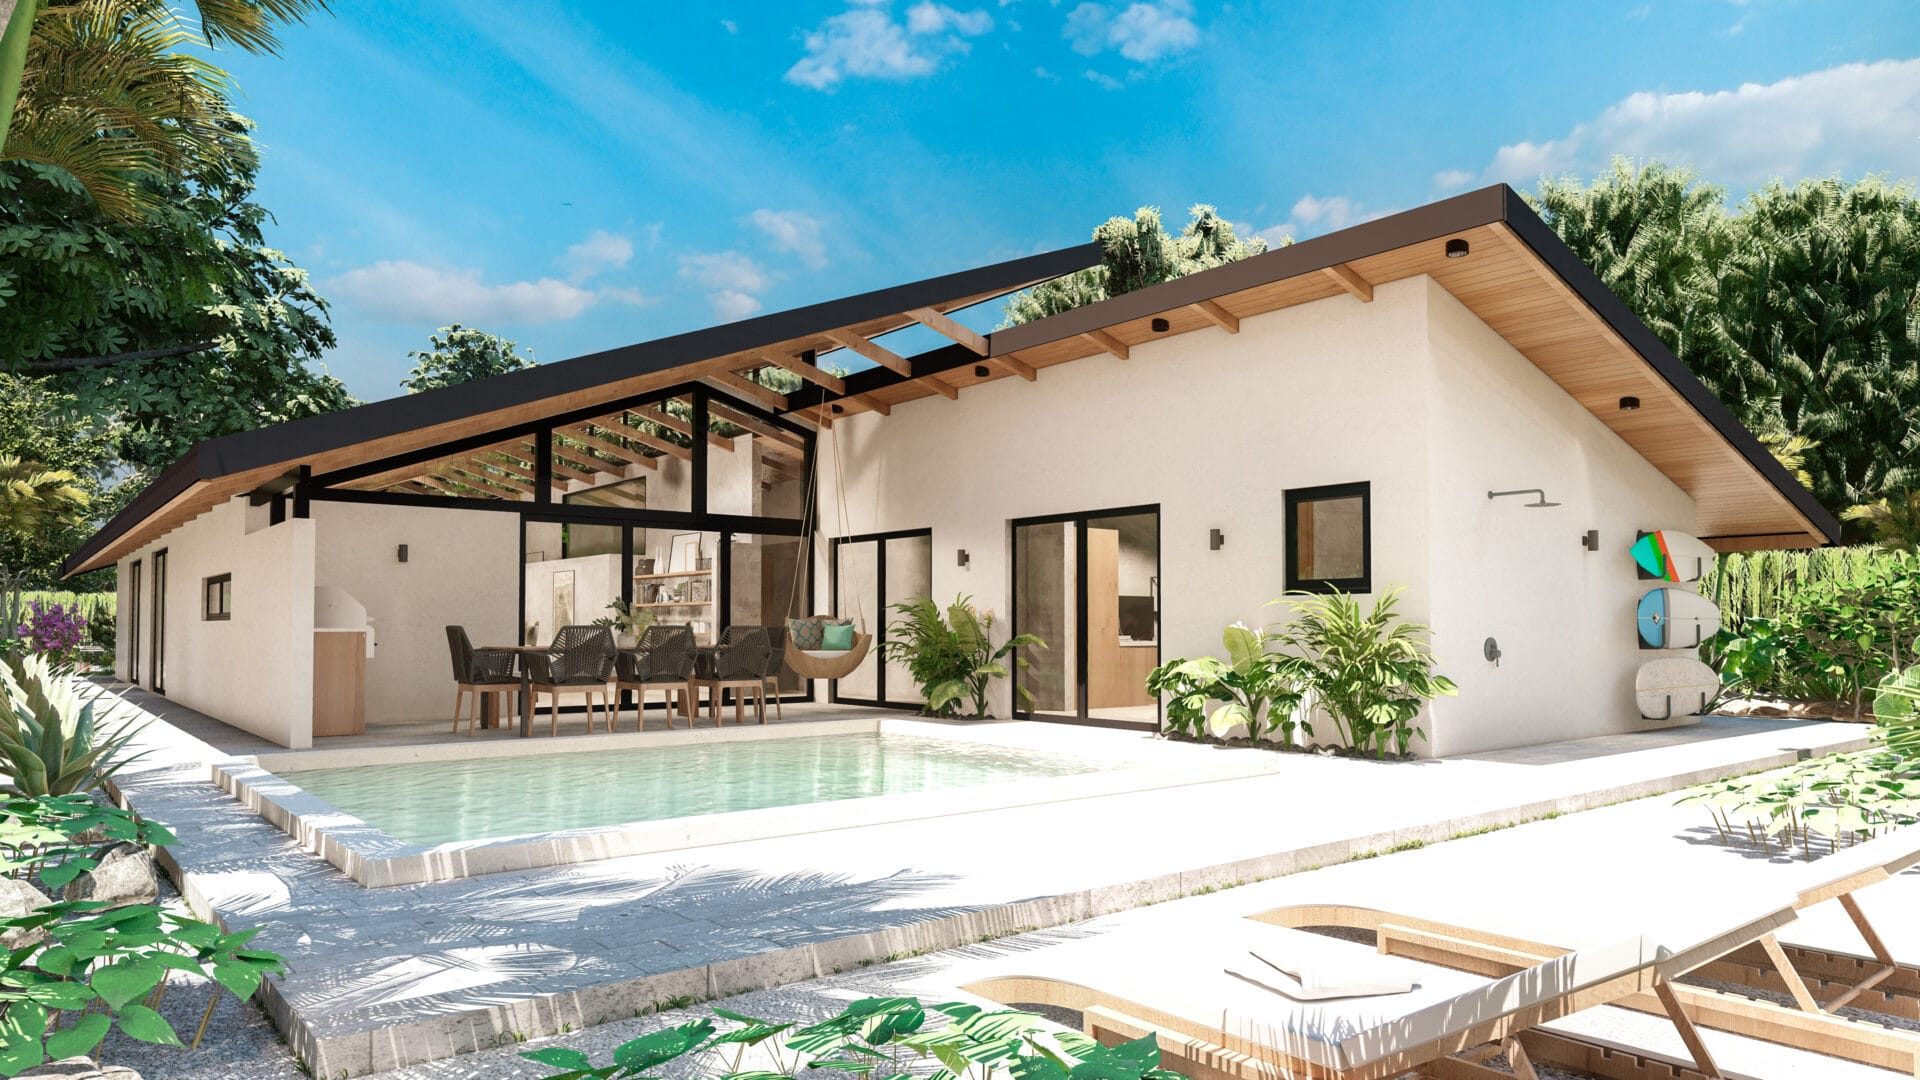 Avemoana – 4BR Single-Family Home + Pool, Walking Distance to Avellanas Beach!